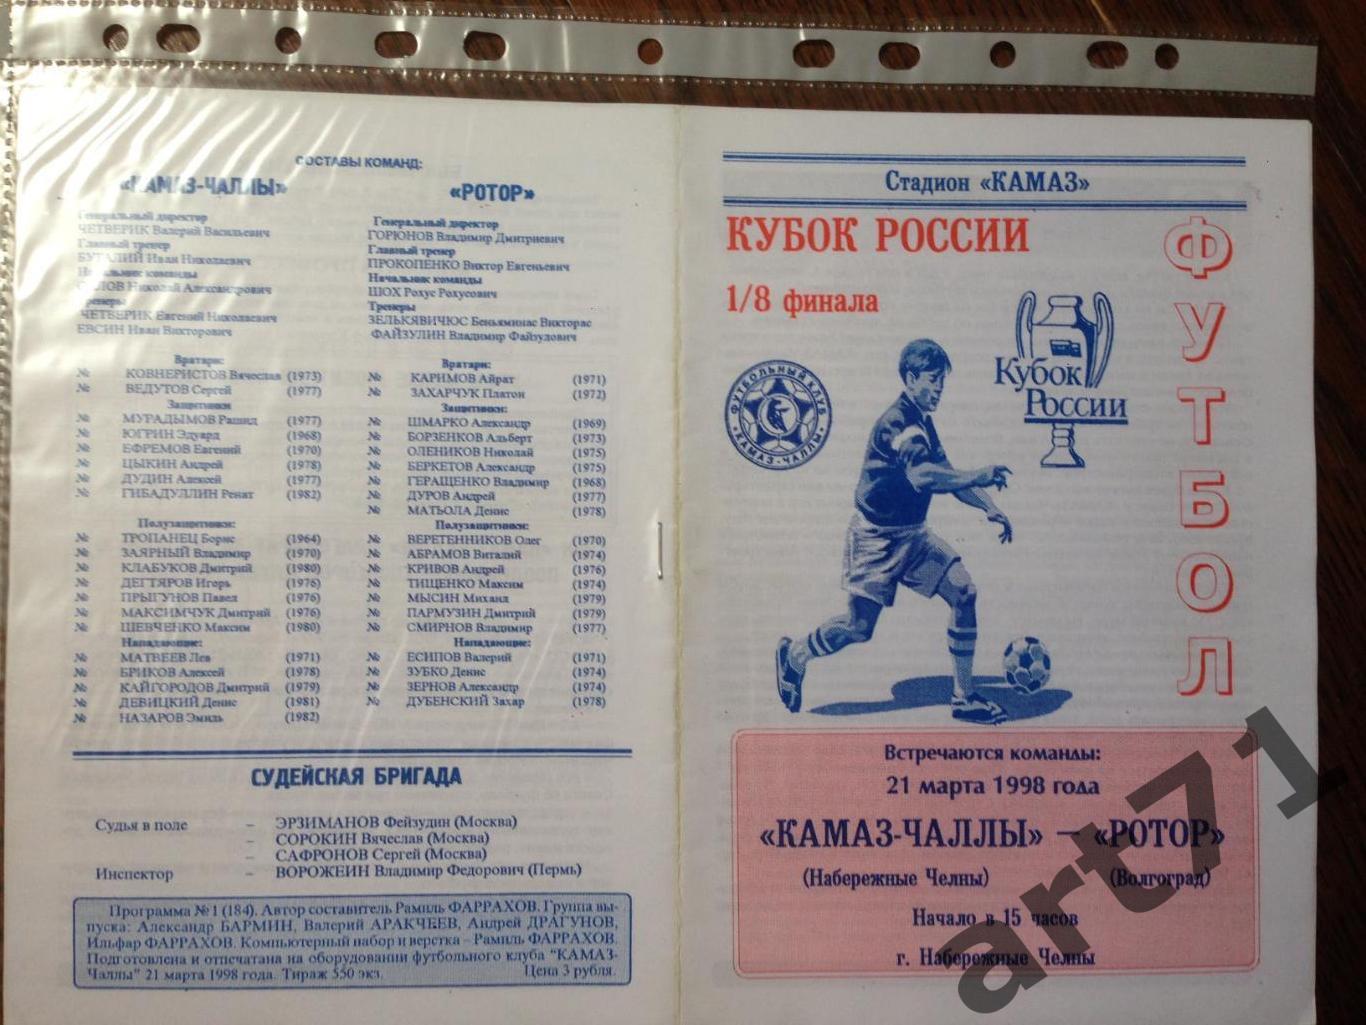 + Камаз-Чаллы (Набережные Челны) - Ротор (Волгоград) 1998 Кубок России